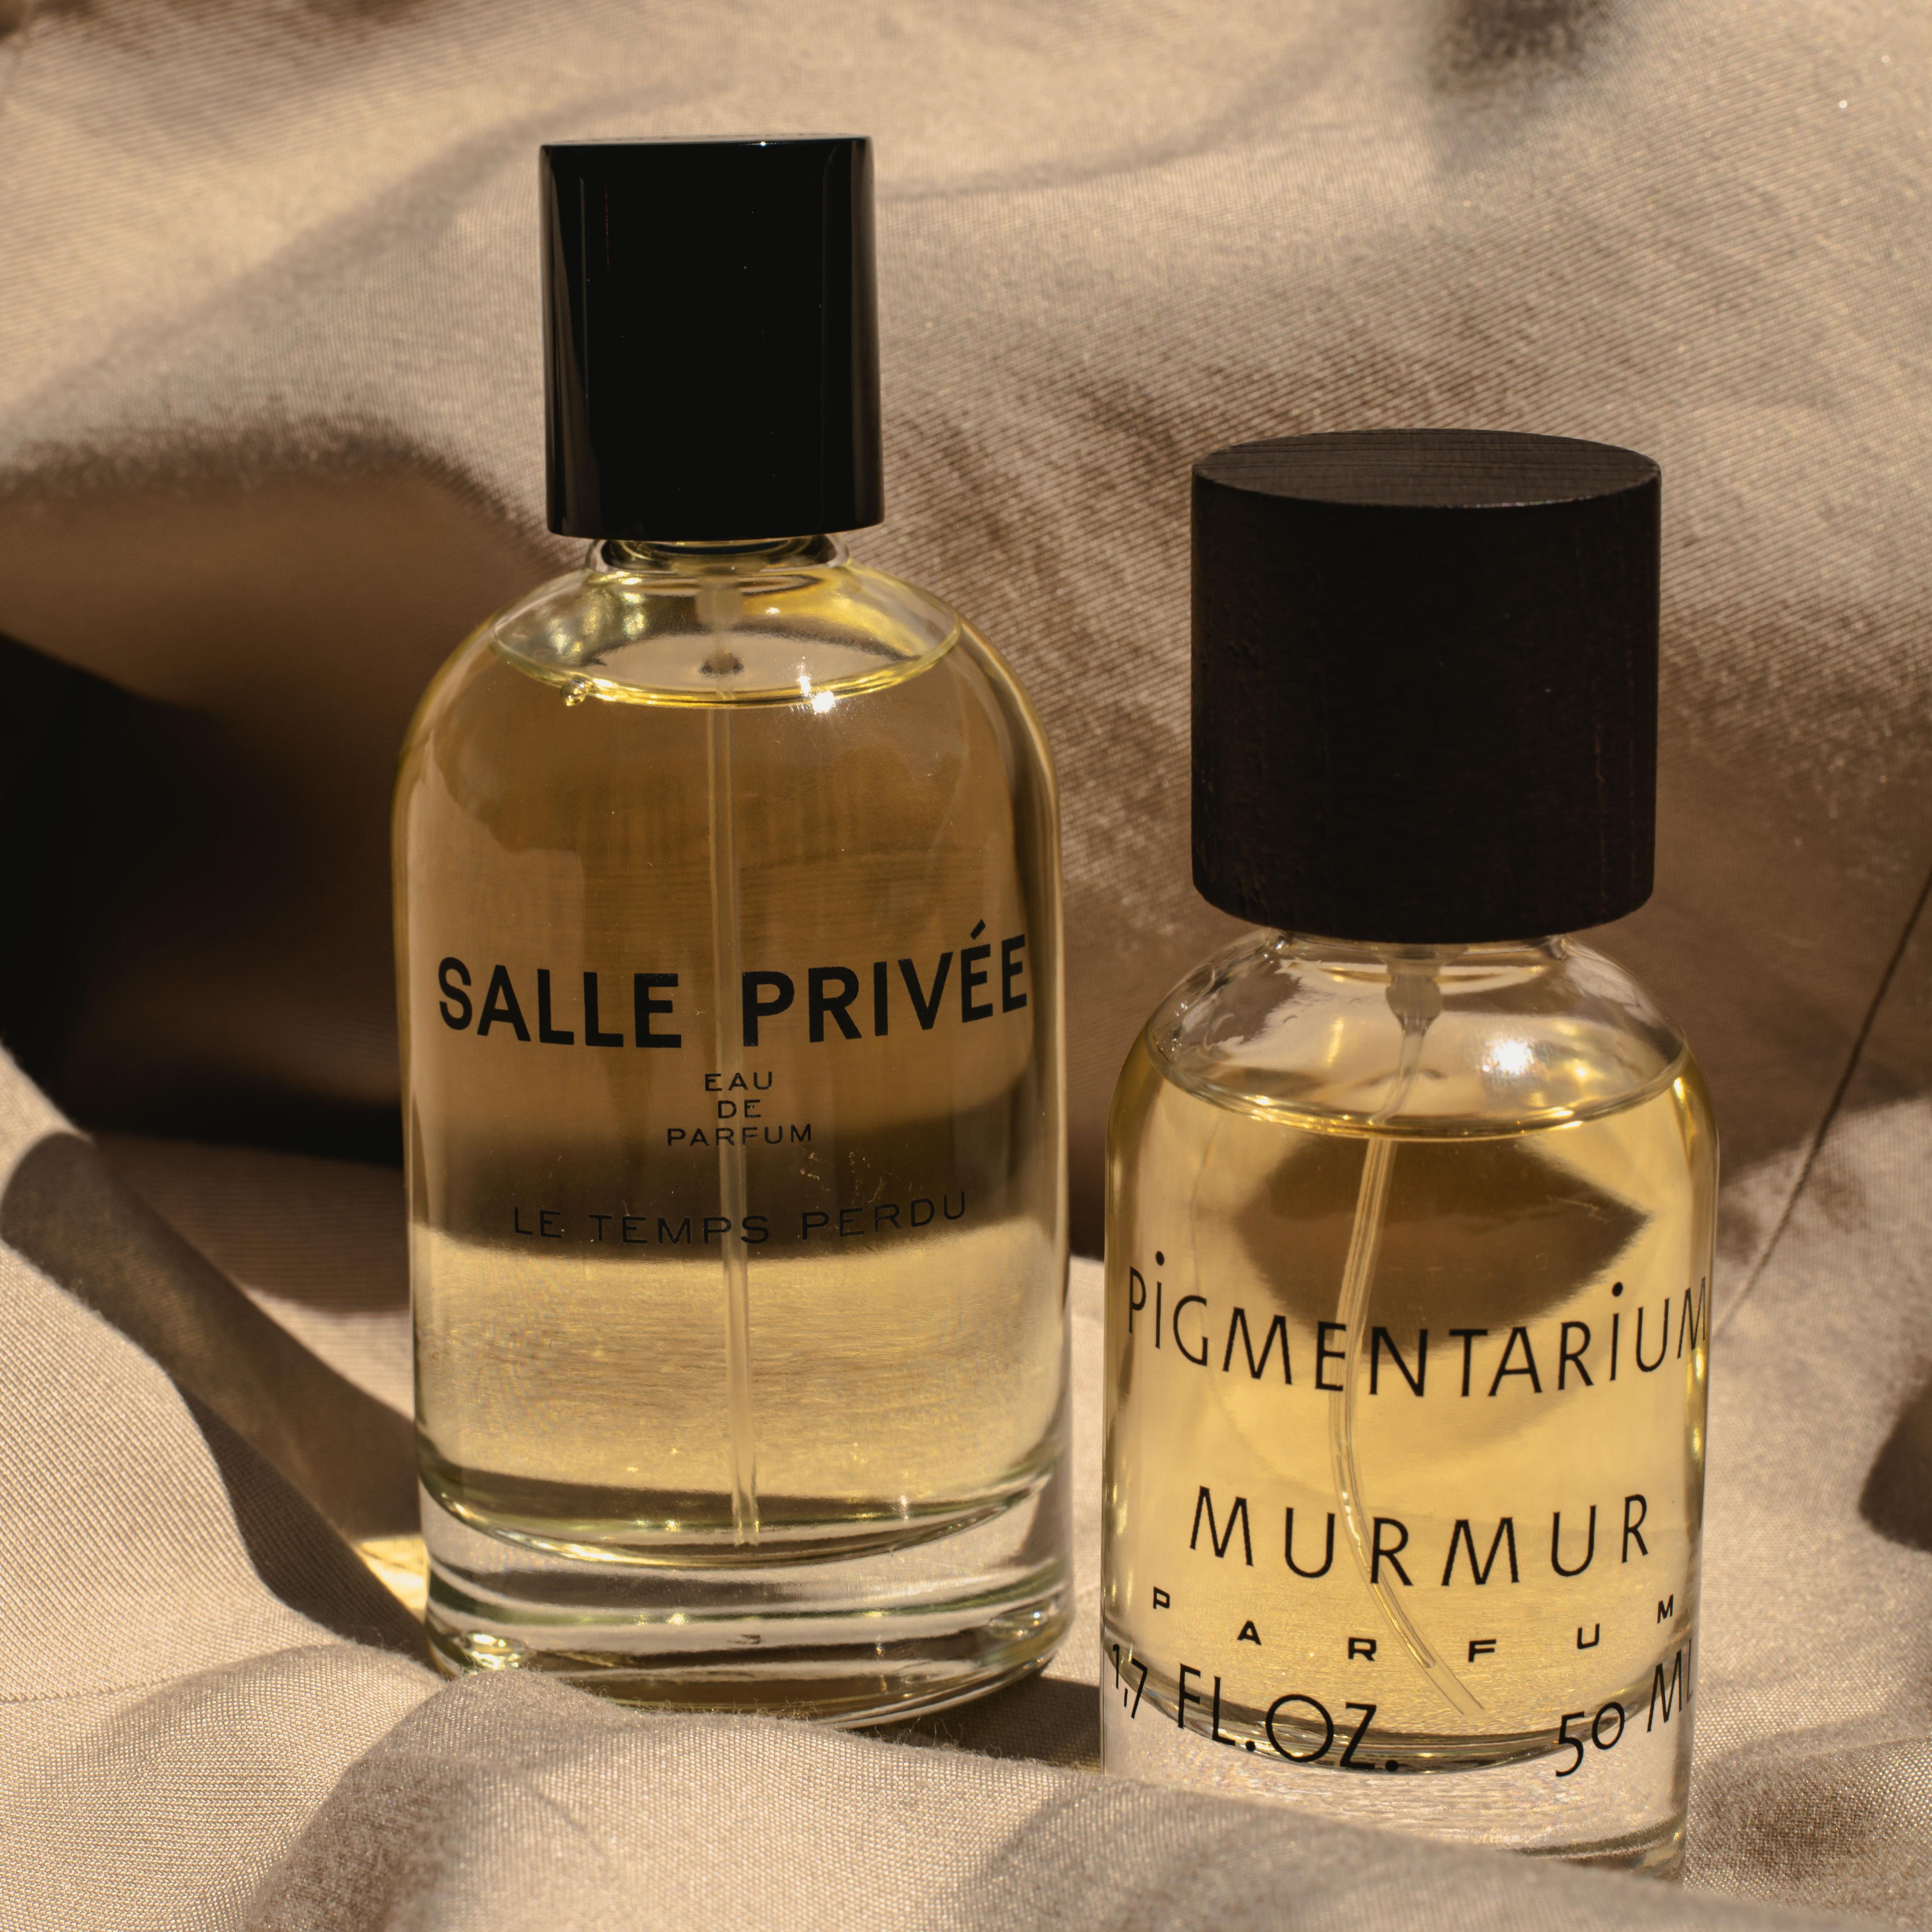 Le temps perdu en Murmur amber perfumes | Perfume Lounge